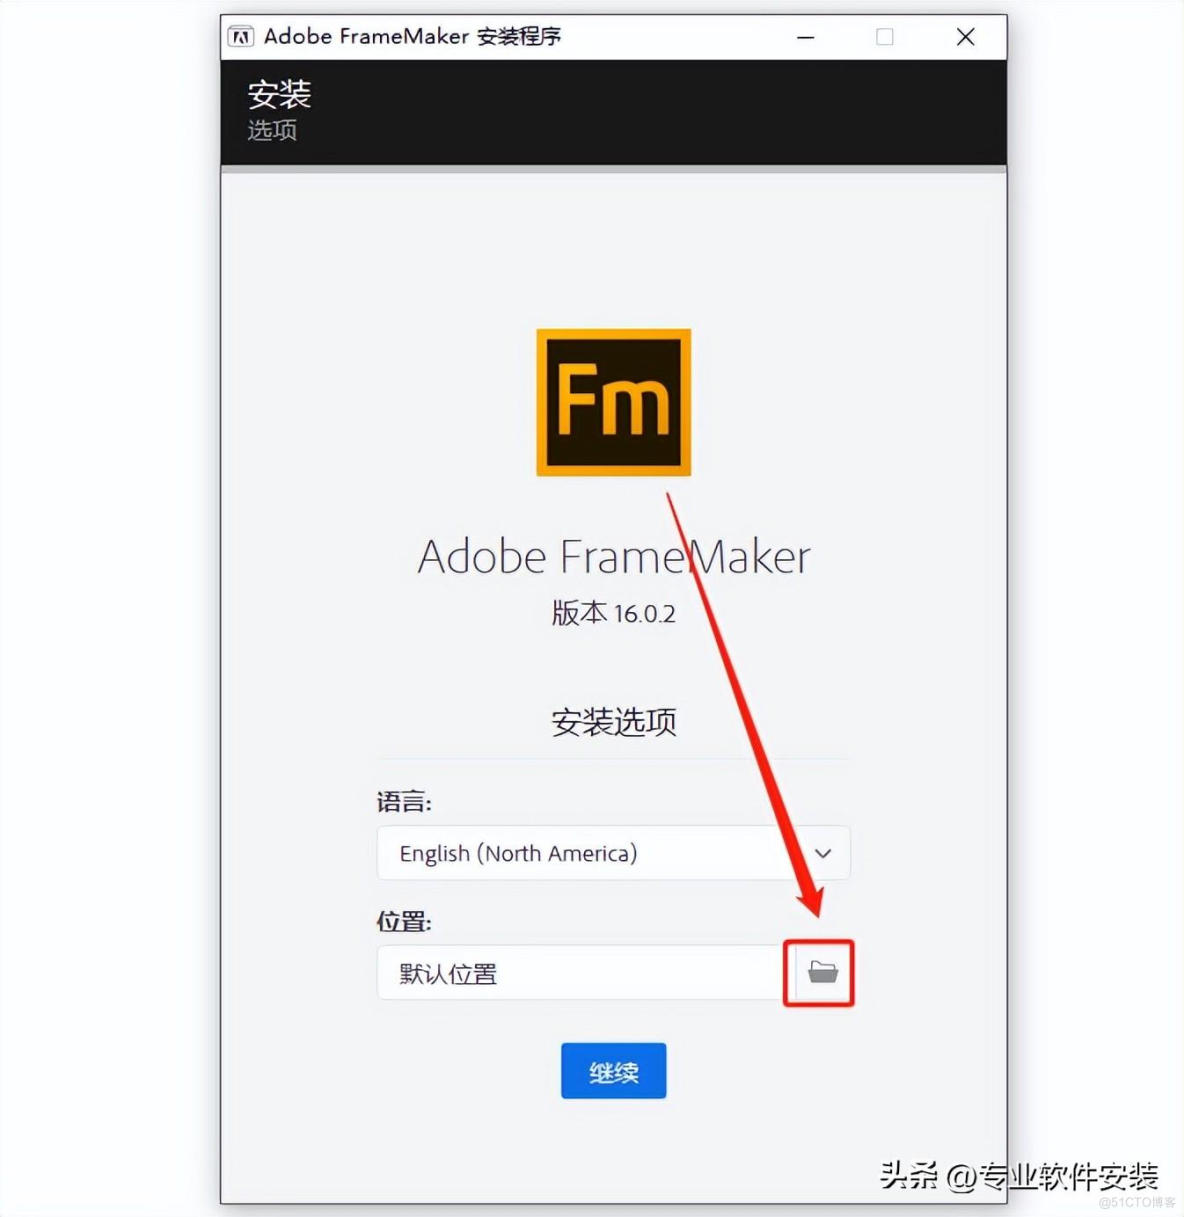 Adobe FrameMaker（Fm）2020软件安装包和安装教程_Adobe FrameMaker_05